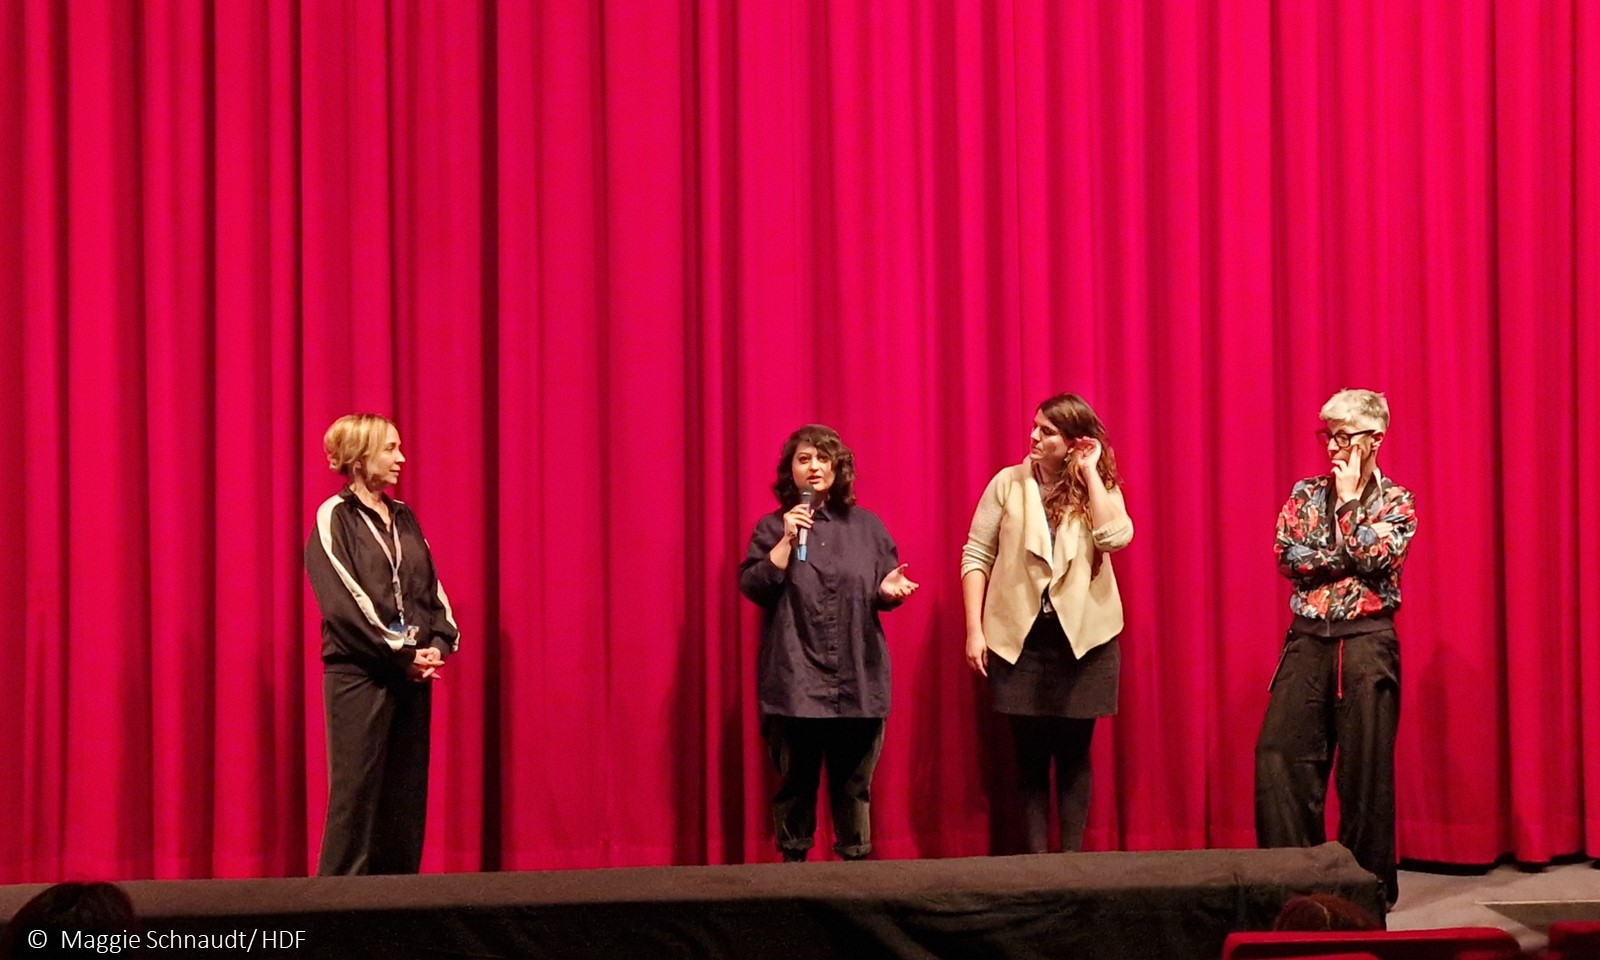 Frauen vor Kinovorhang v.l.n.r.: Moderatorin, Helin Celic, Rebeca Sánchez López und Raquel Fernández Núñez.